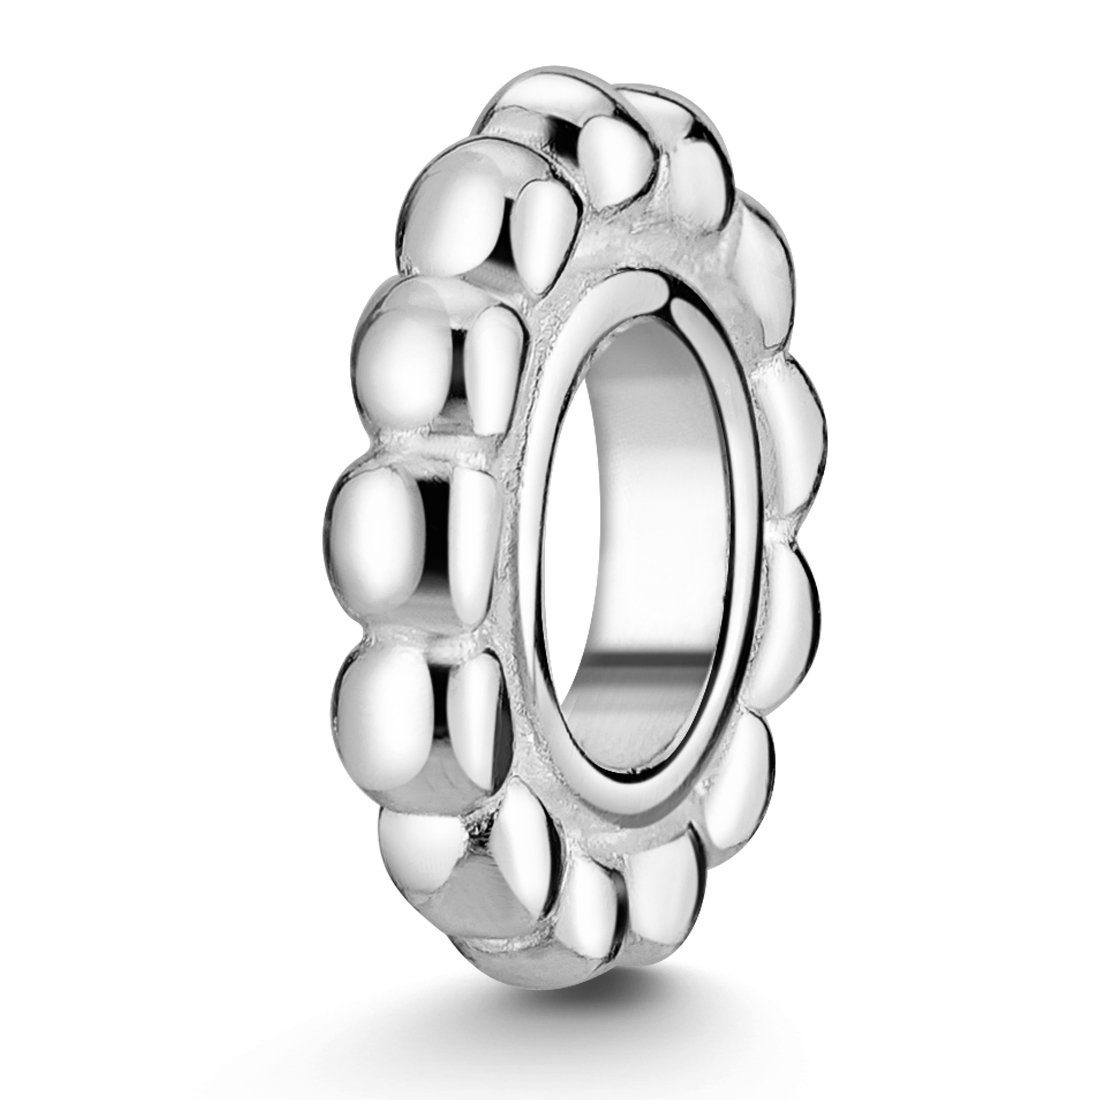 Materia Bead Spacer / Zwischenelement Silber Perlen Kugeln 887, 925 Sterling Silber | Beads